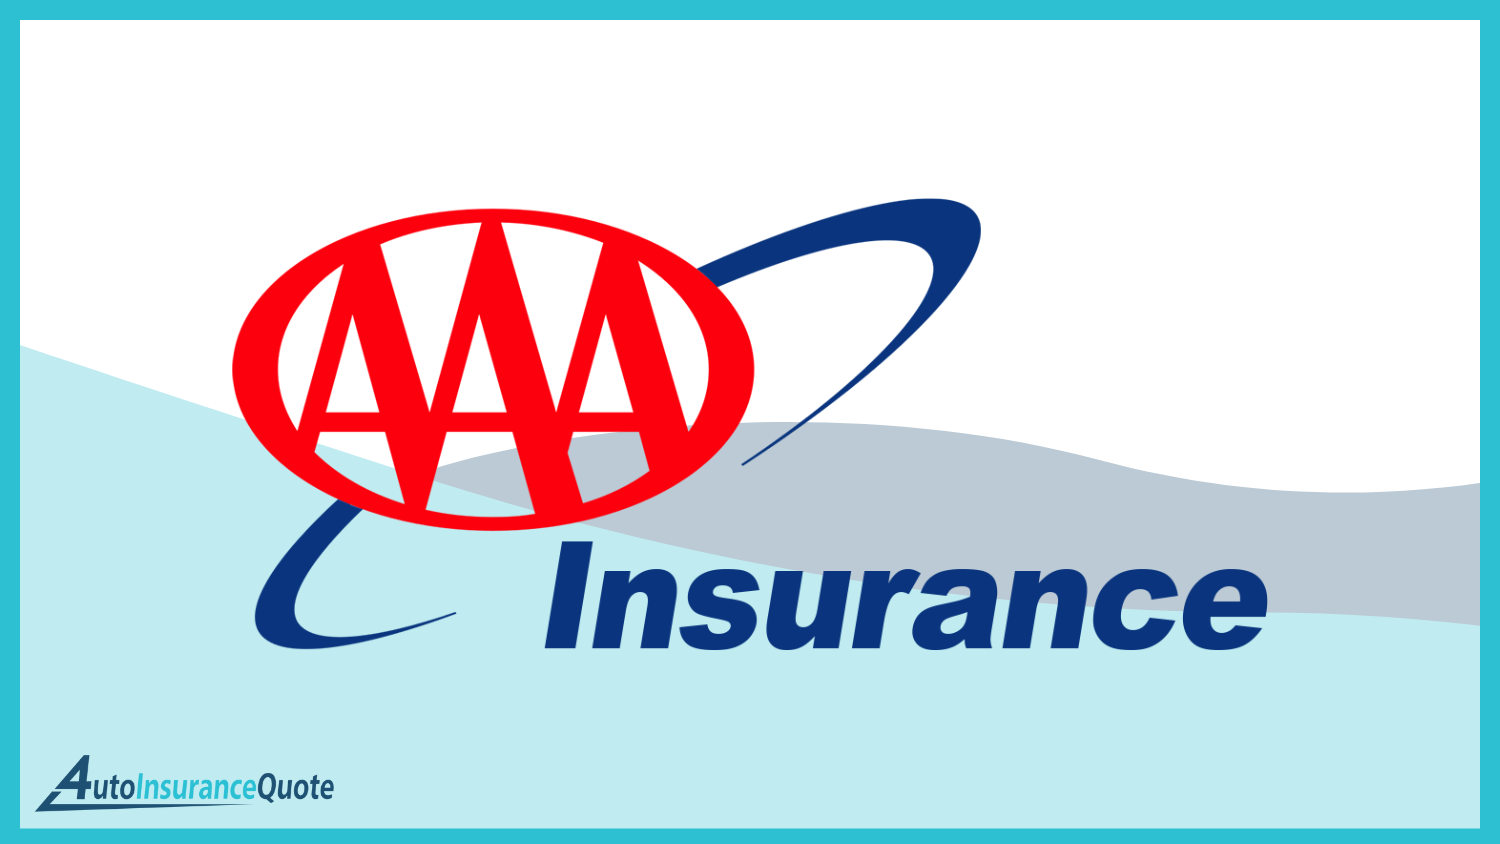 Cheap Auto Insurance for Teachers: AAA